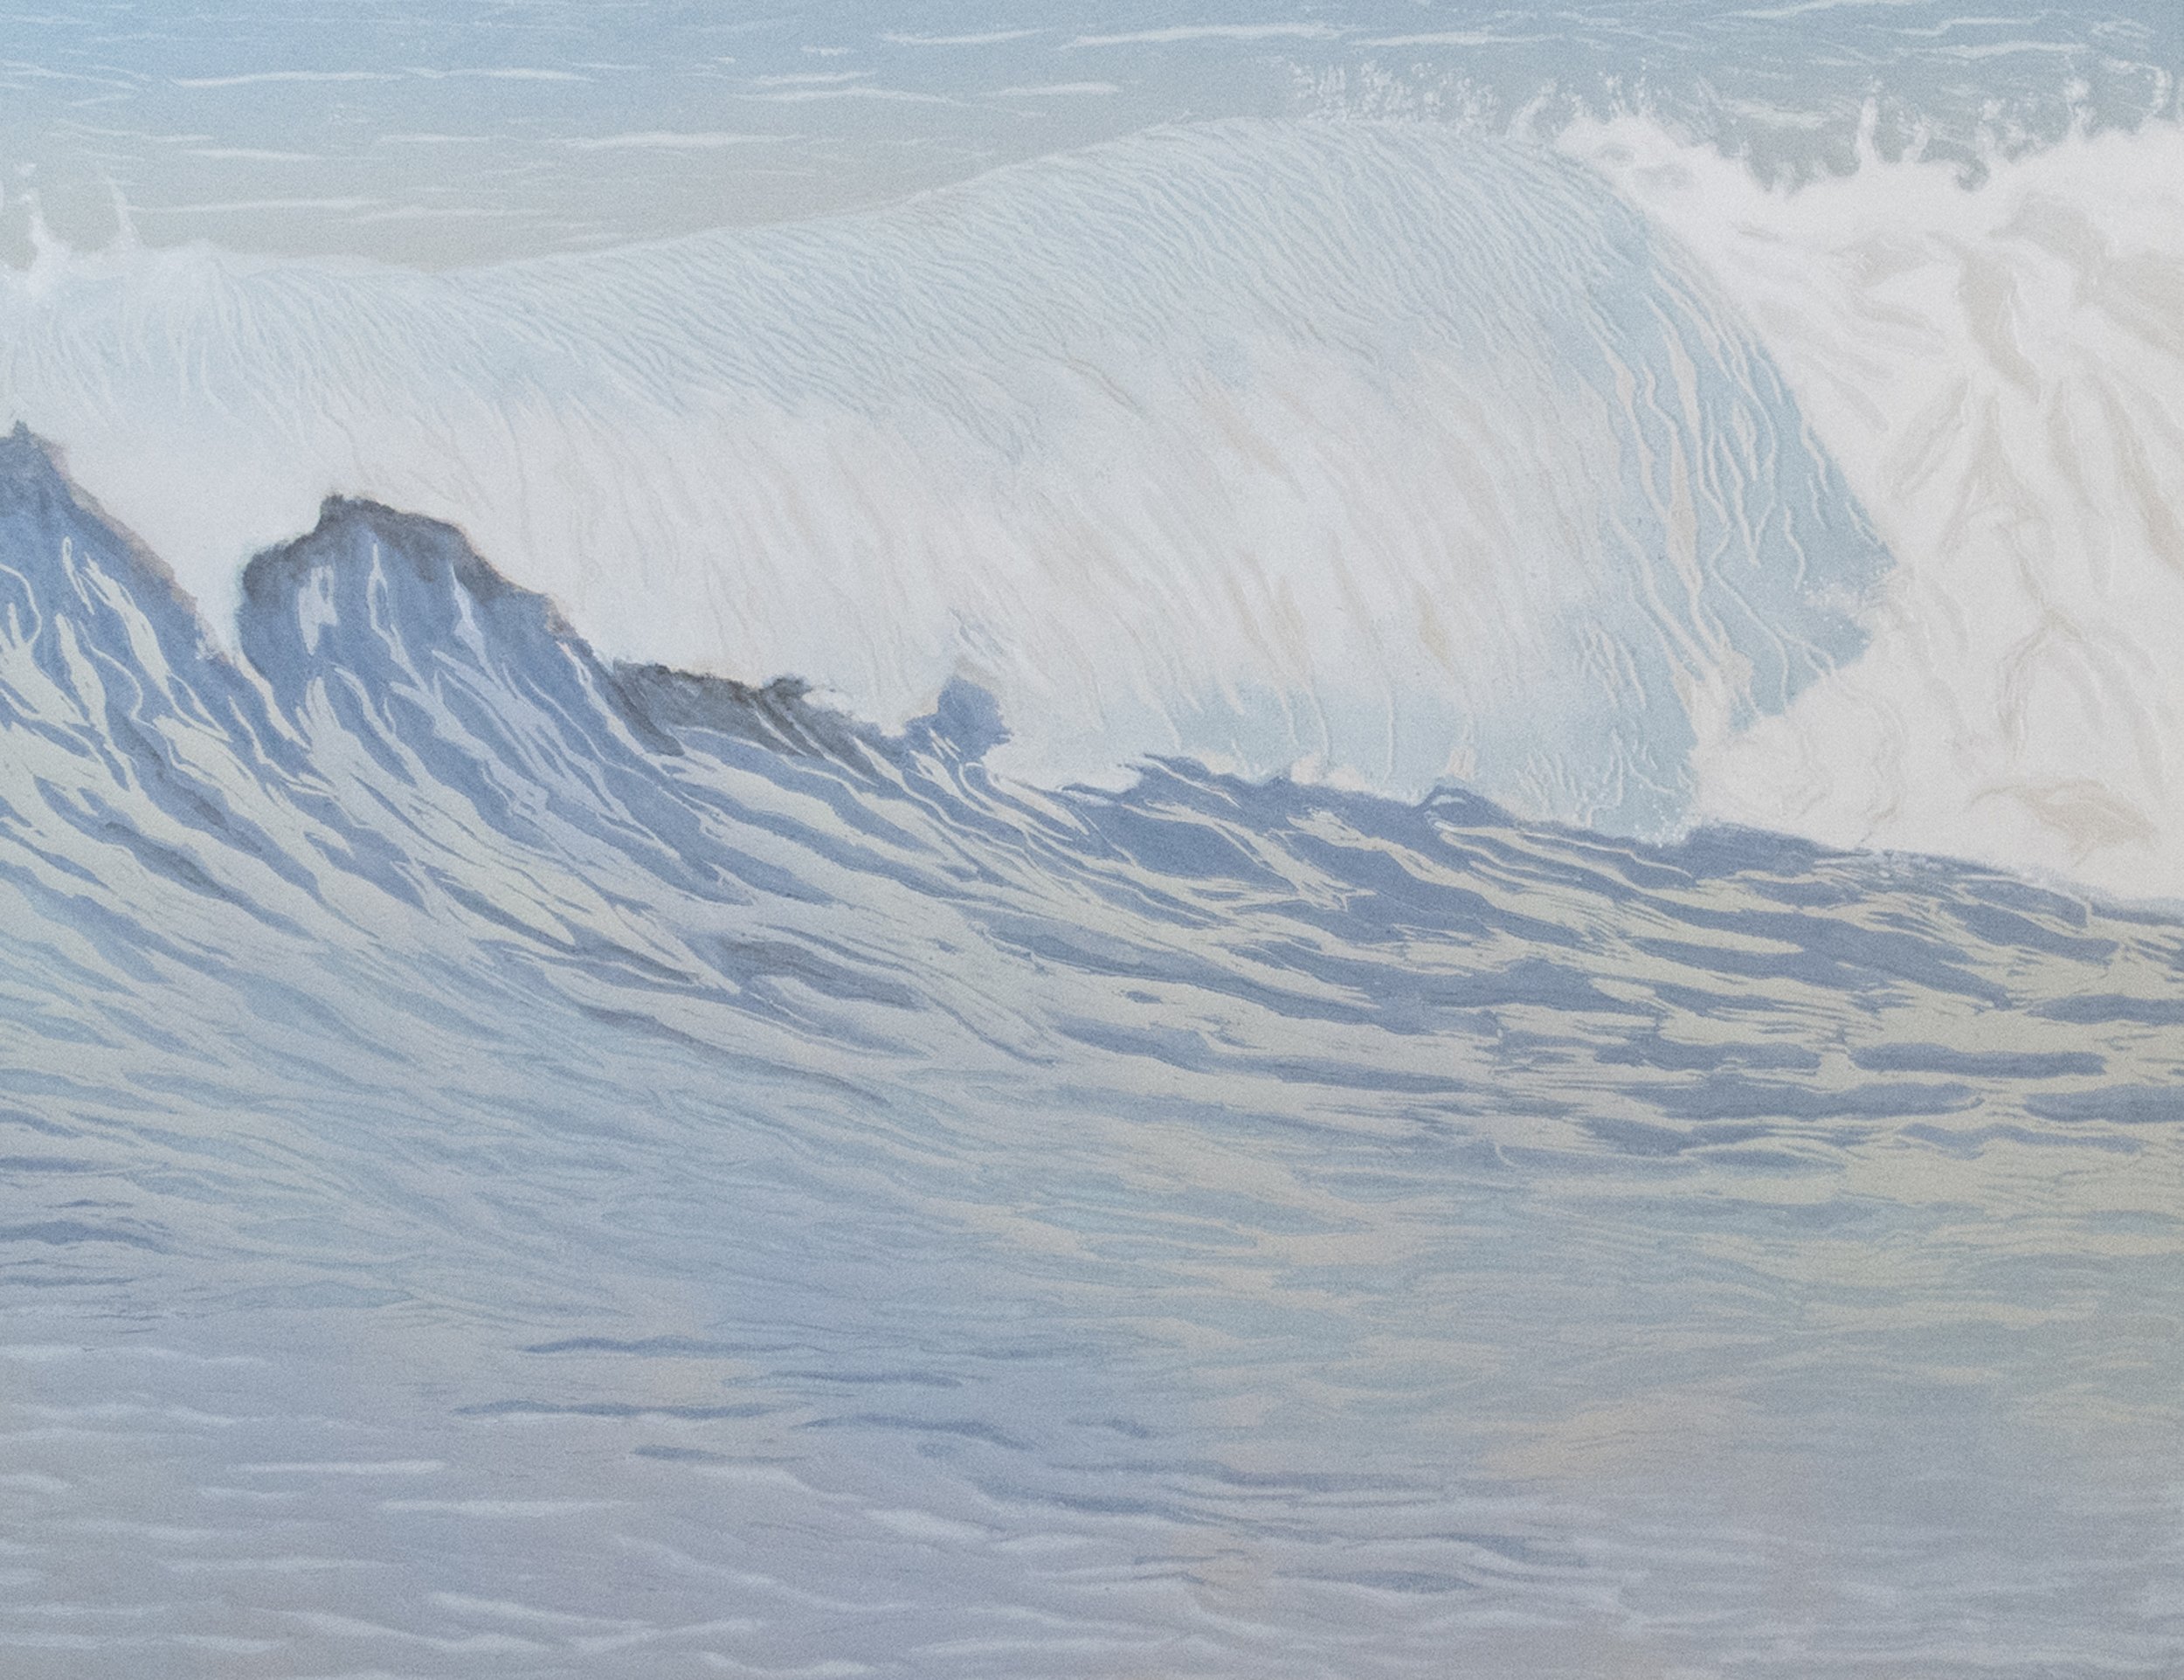  Pamela Carberry   Anatomy of a Wave   Linocut 